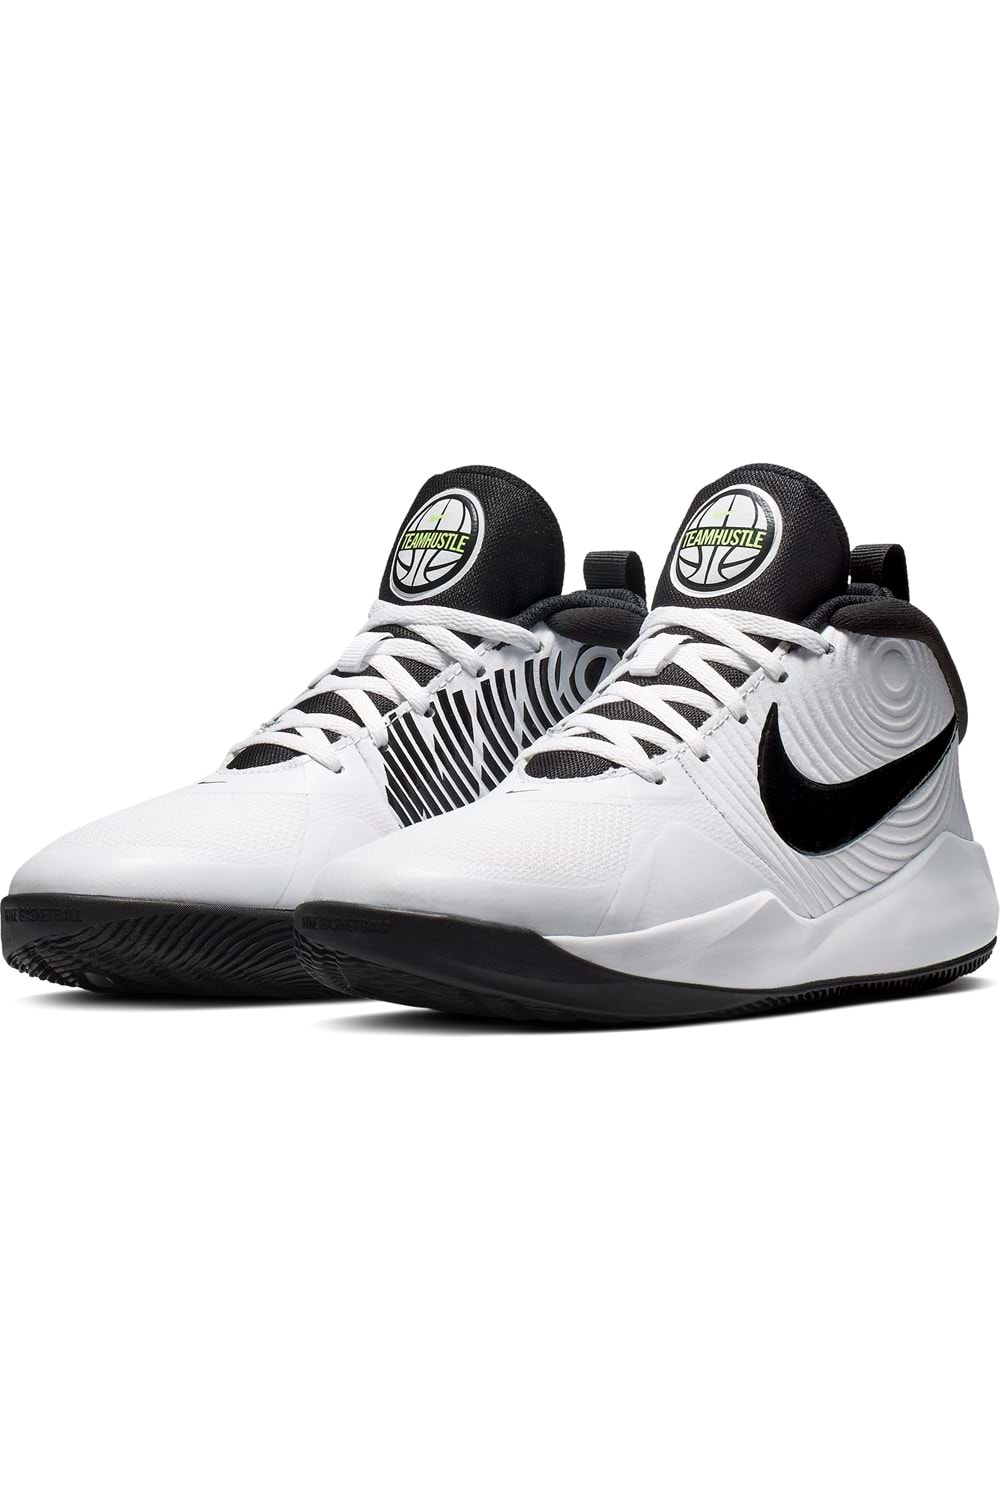 Nike Team Hustle D 9 (GS) Erkek Basketbol Ayakkabısı AQ4224-100